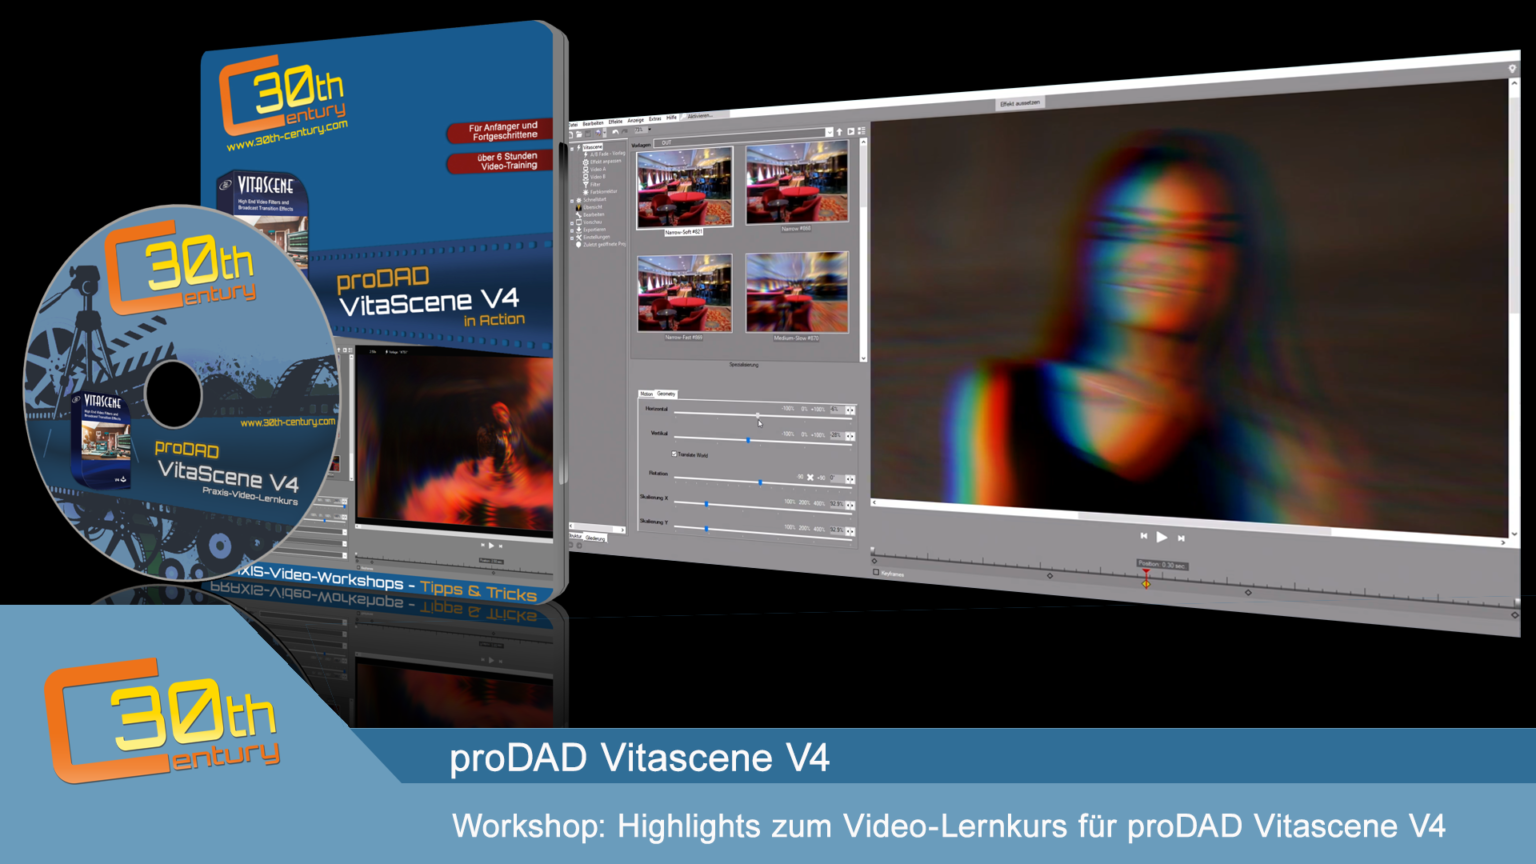 proDAD VitaScene 5.0.312 for windows instal free